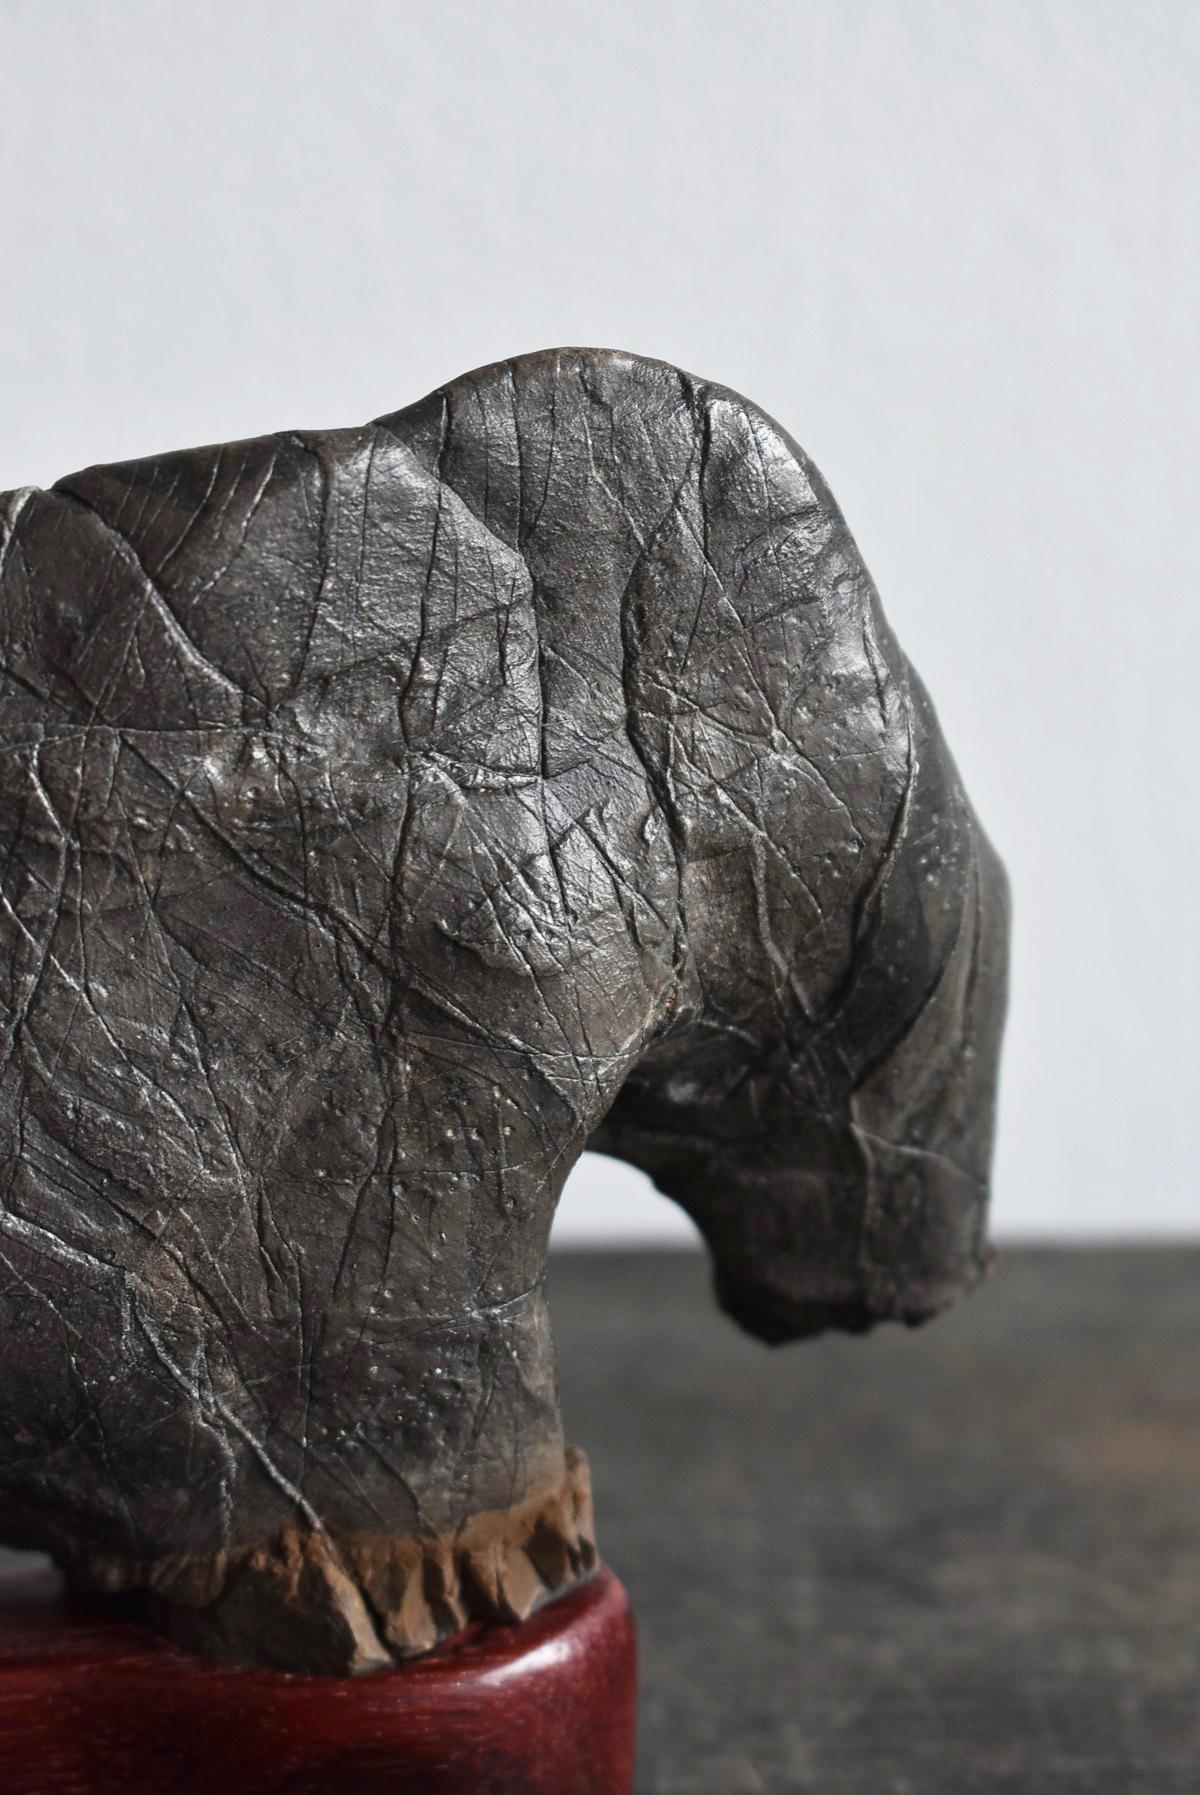 Small Japanese Old Stone / Elephant-Shaped Ornamental Stone / Scholar's Objects 1